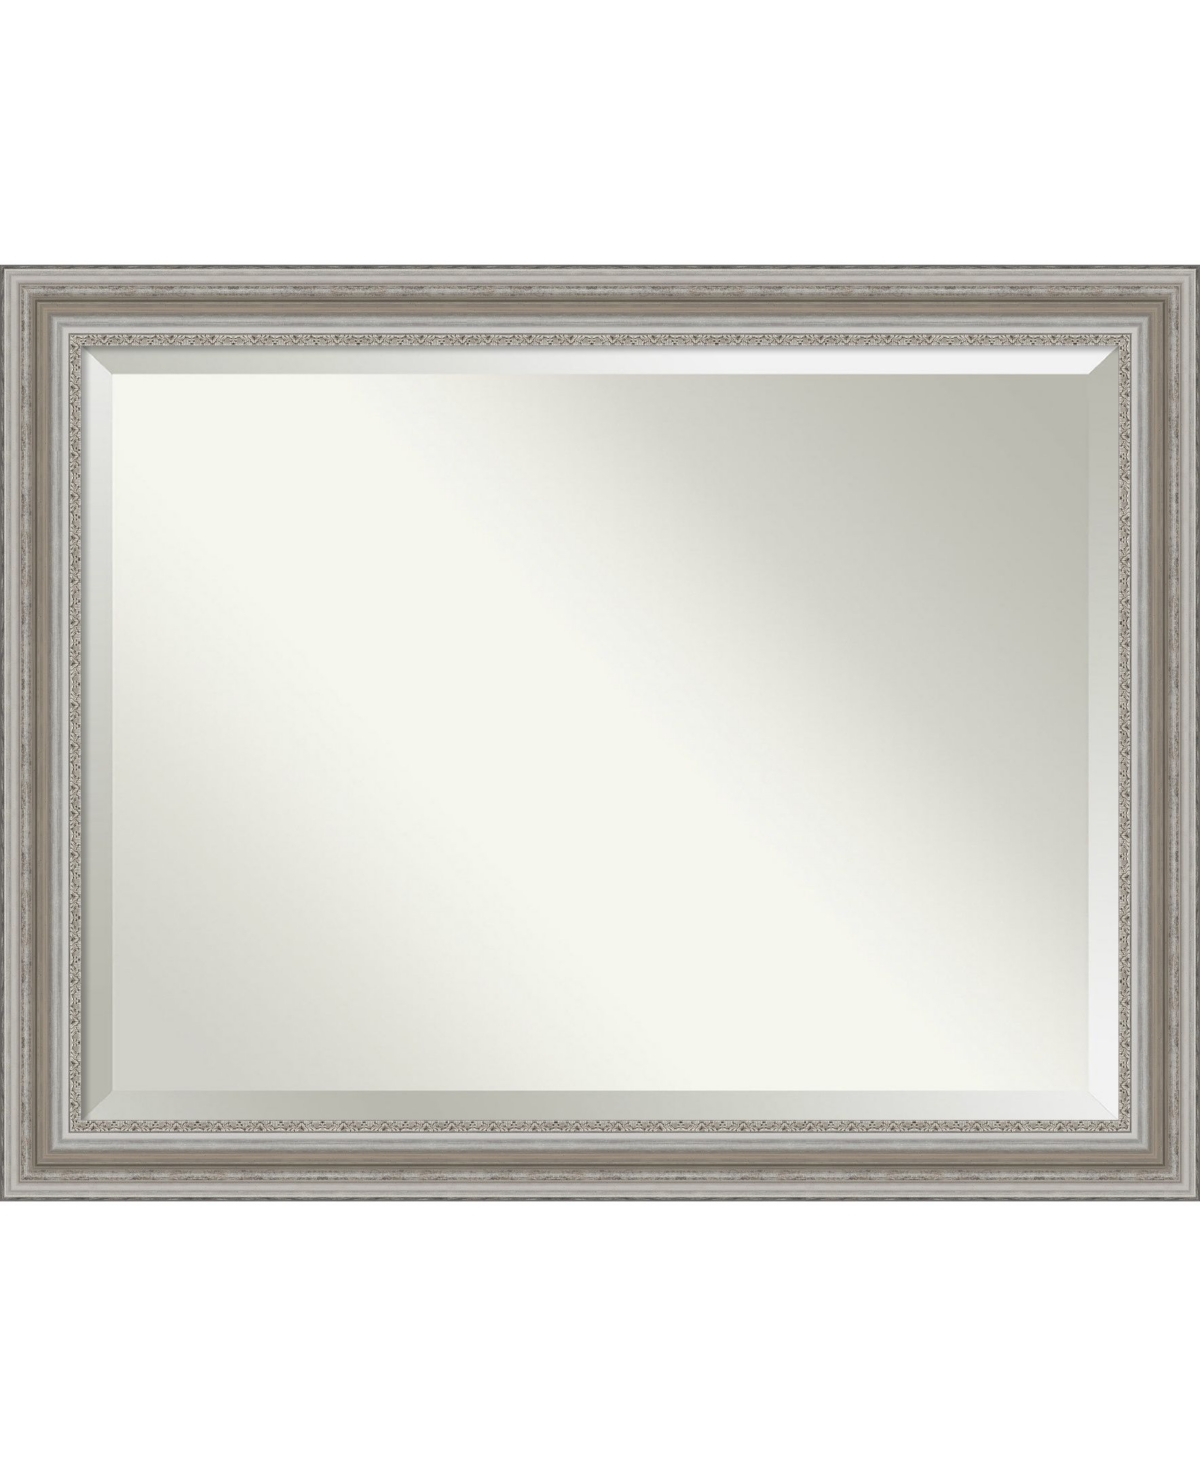 Parlor Silver-tone Framed Bathroom Vanity Wall Mirror, 45.5" x 35.50" - Silver